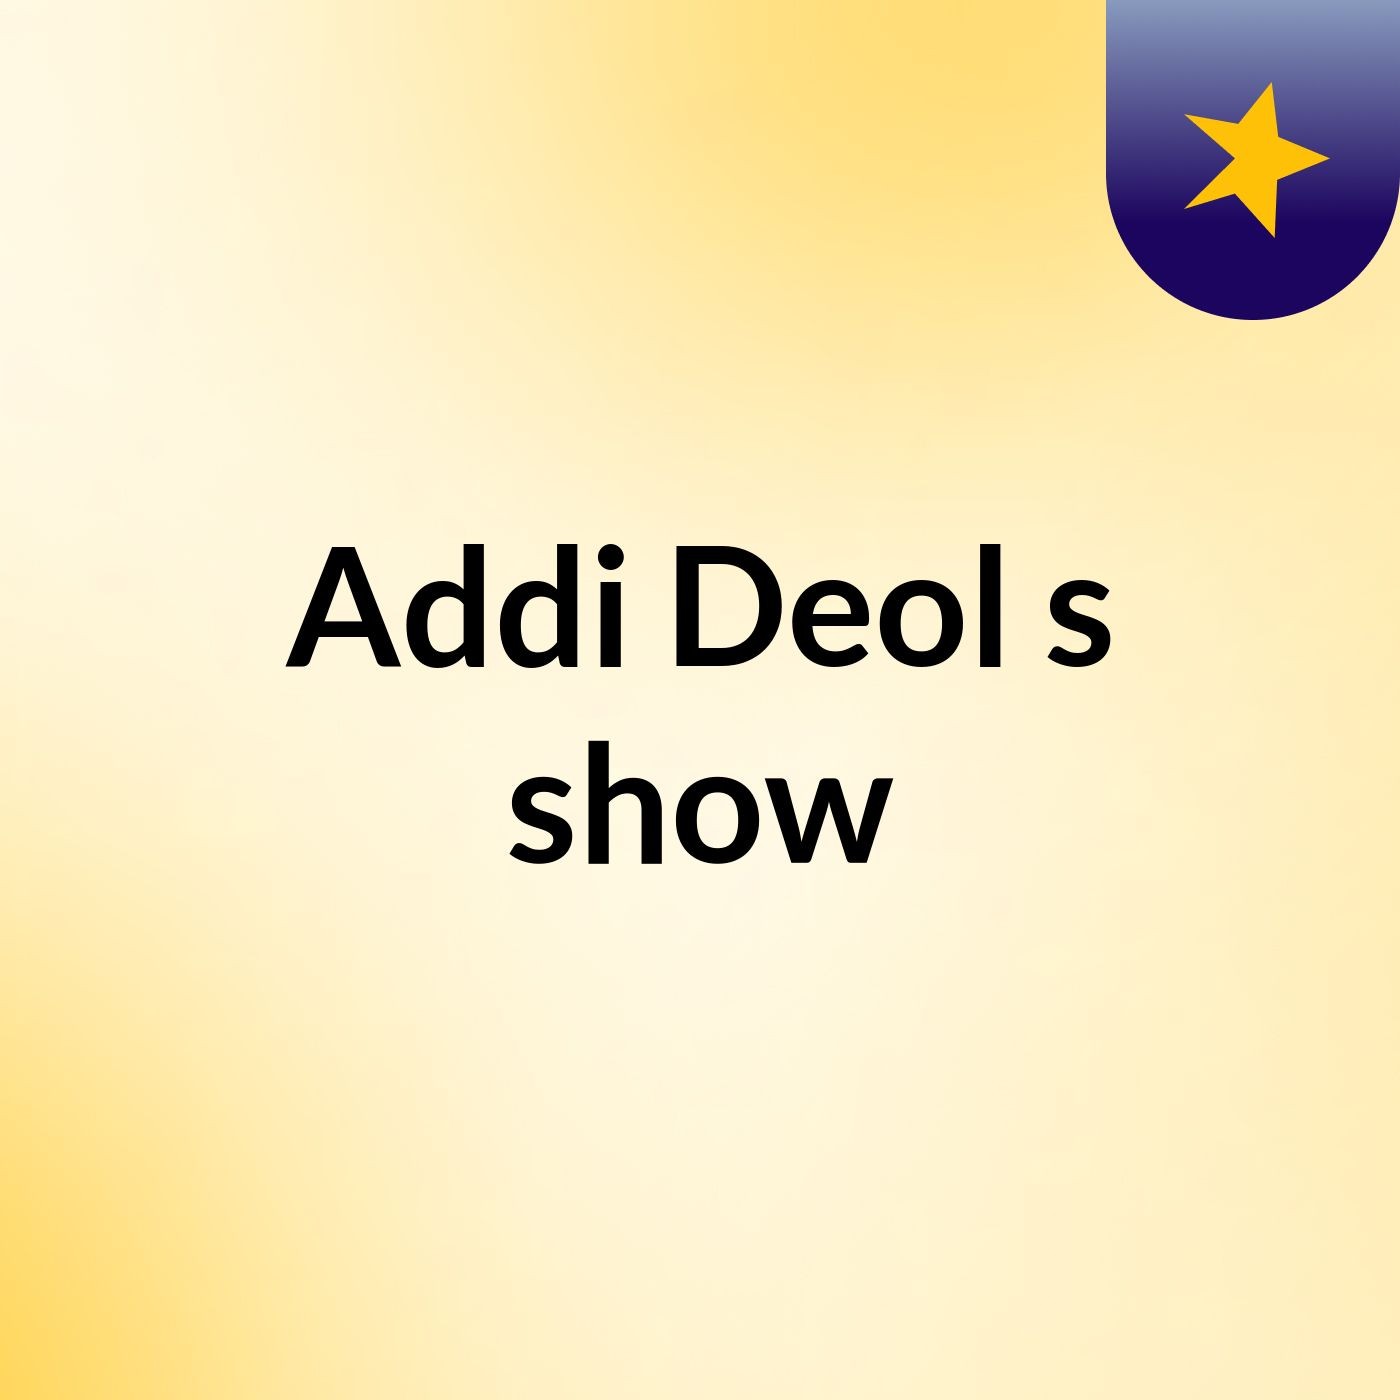 Addi Deol's show